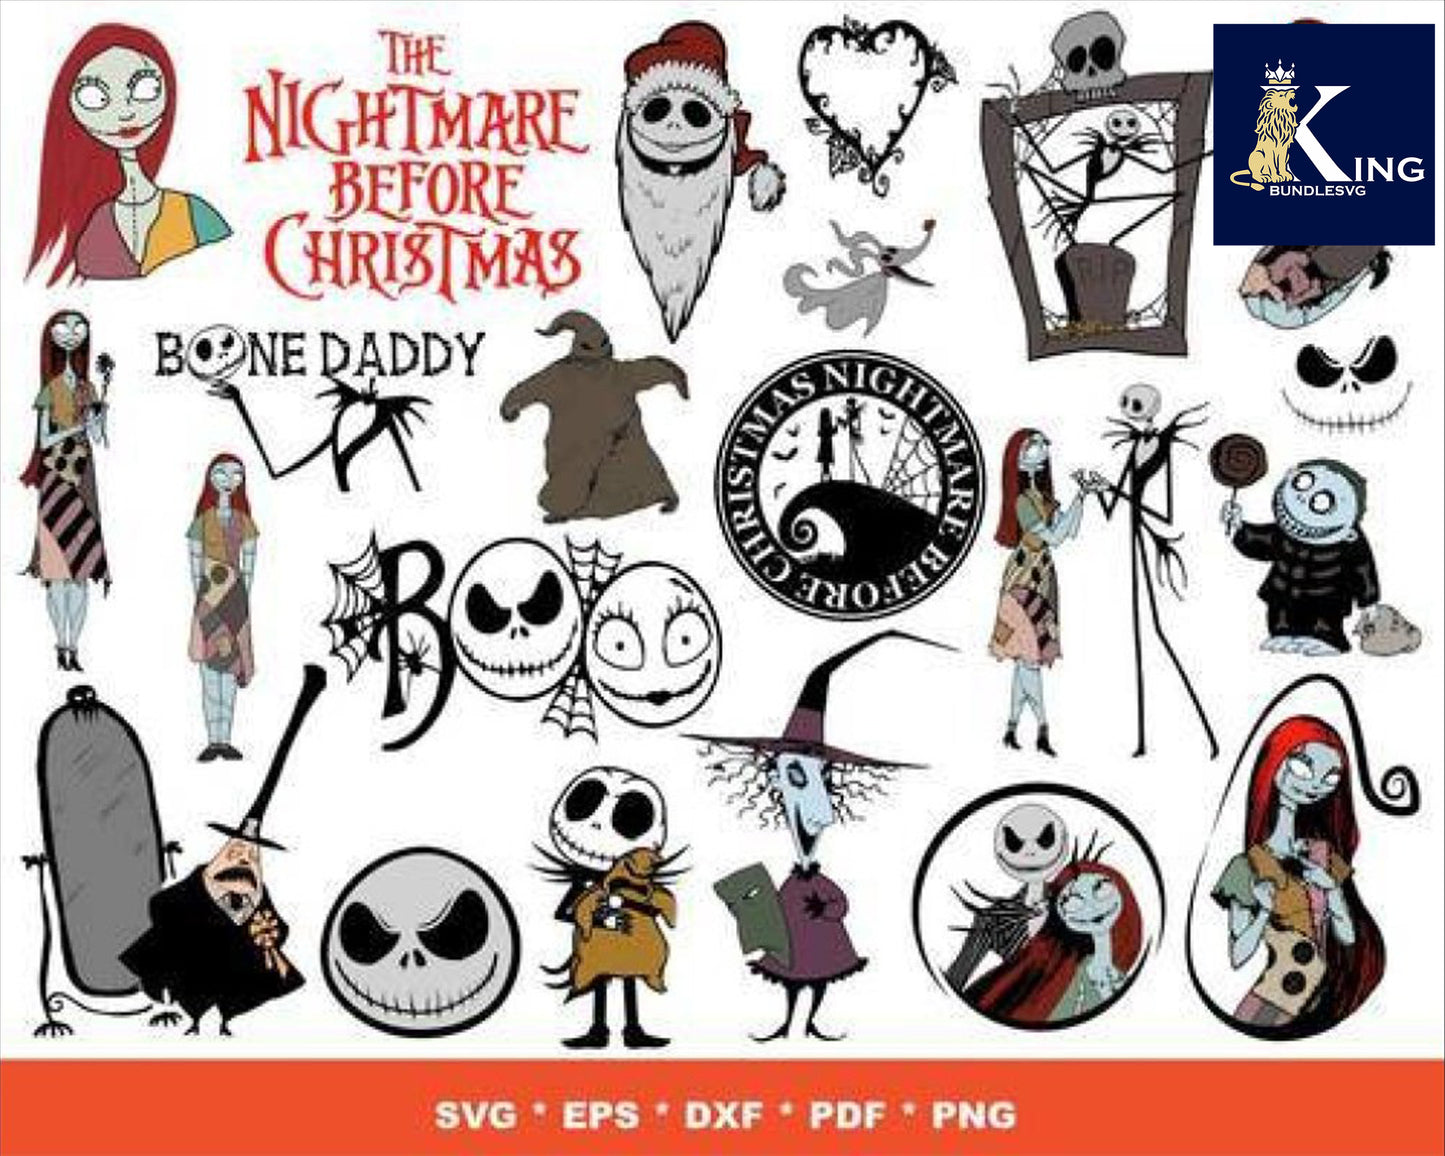 1000+ Nightmare Before Christmas SVG Mega Bundle  svg eps png, for Cricut, Silhouette, digital, file cut